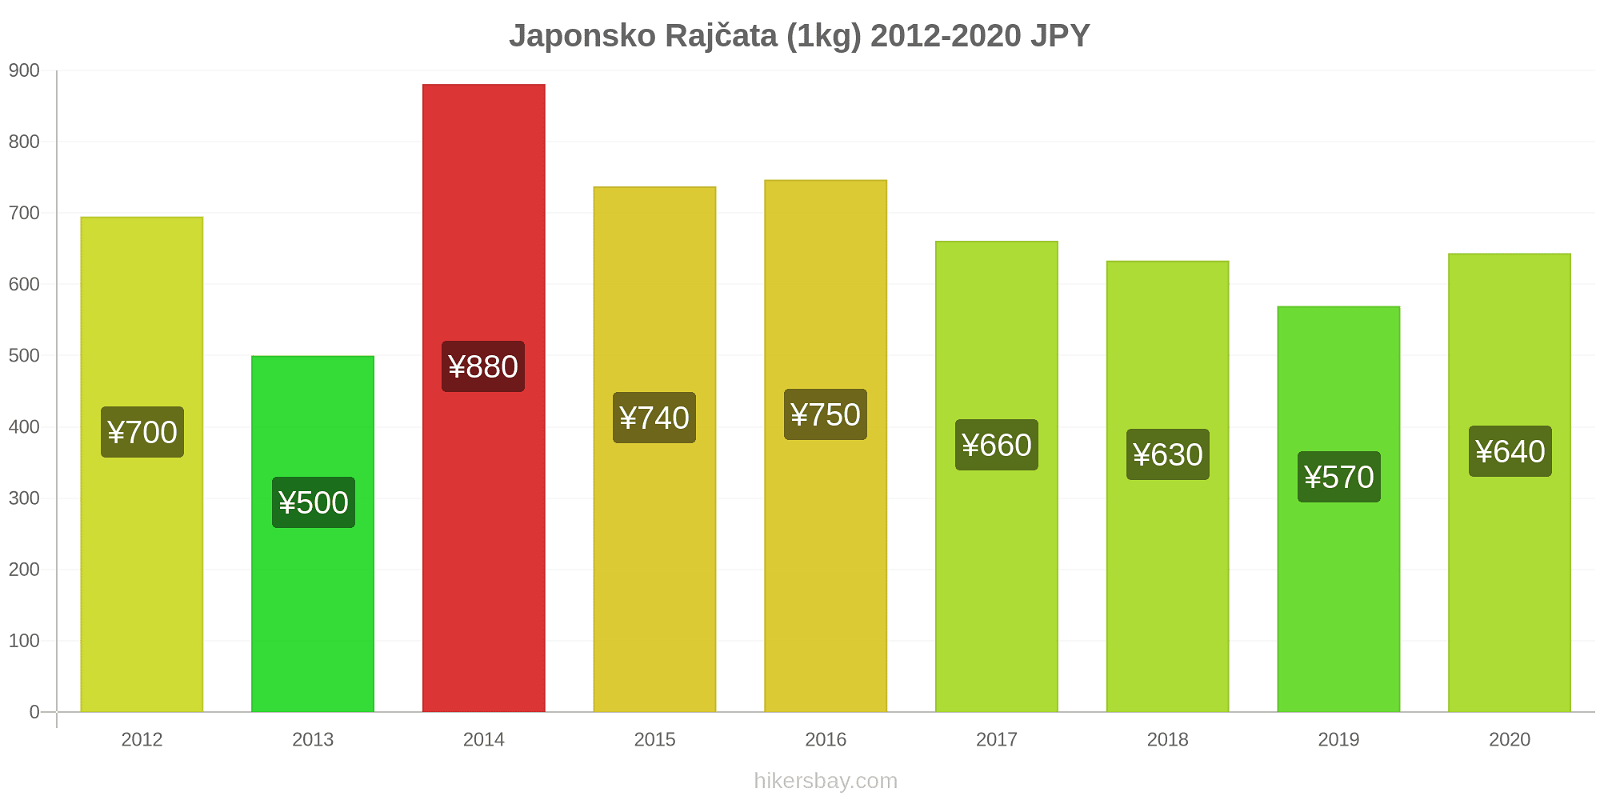 Japonsko změny cen Rajčata (1kg) hikersbay.com